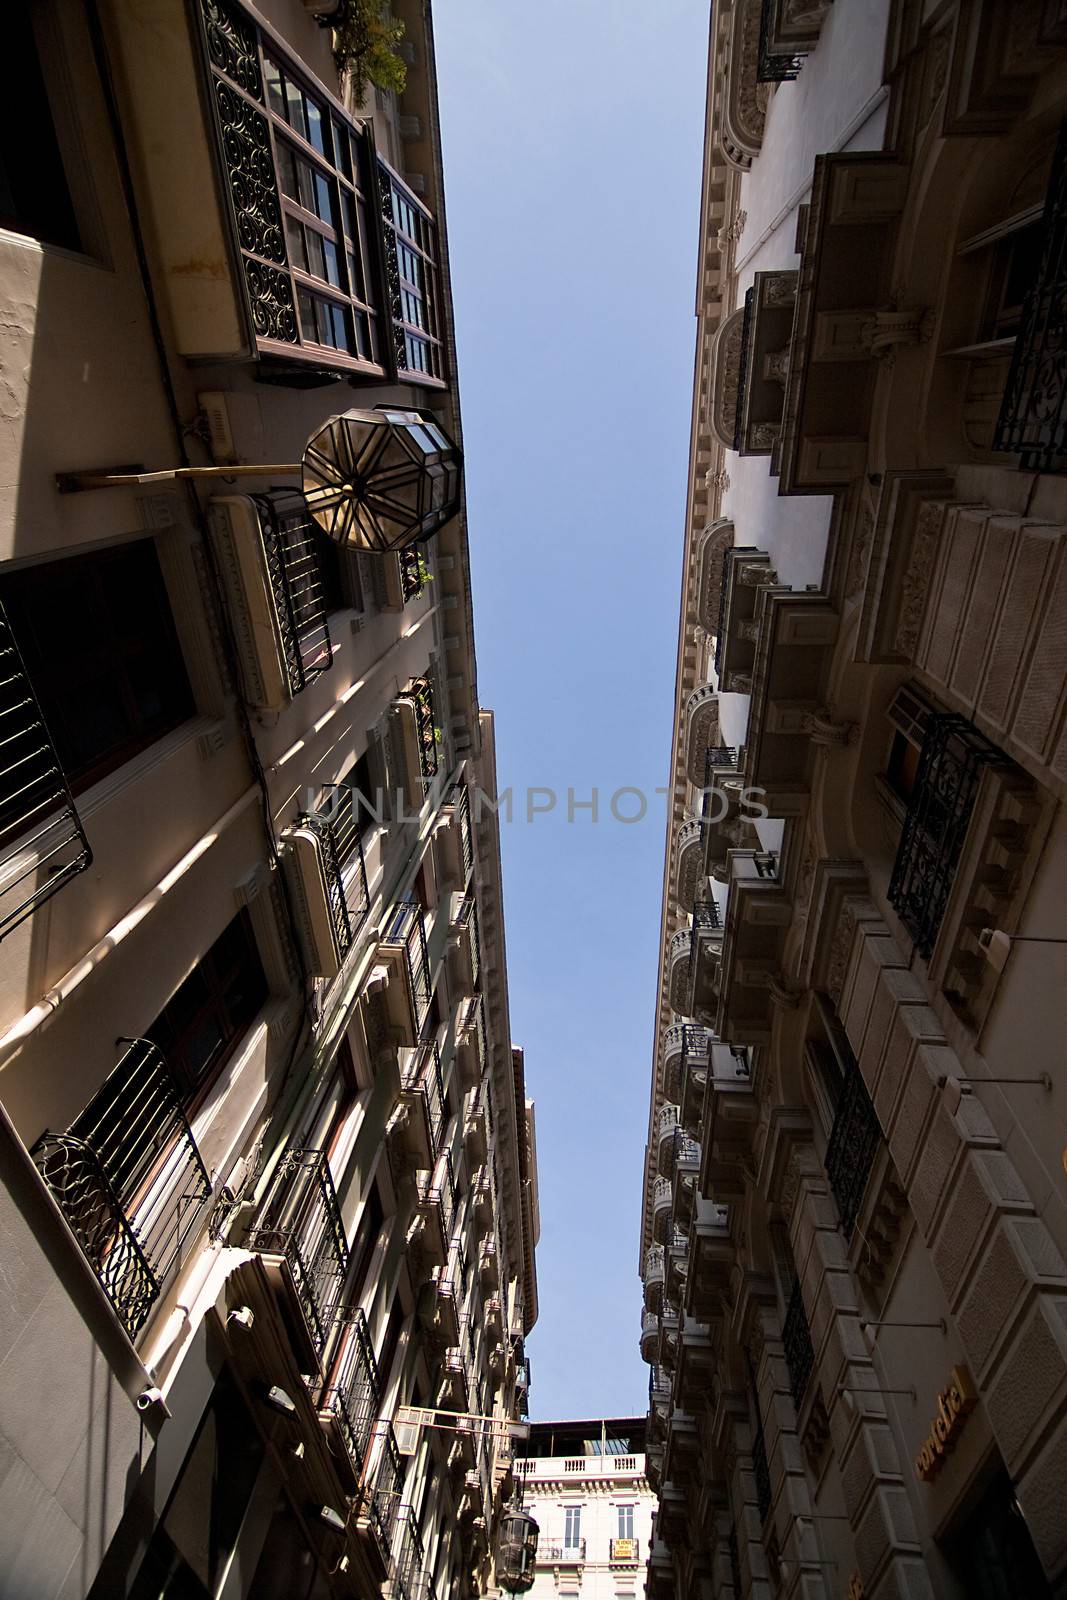 Street of Granada, Spain